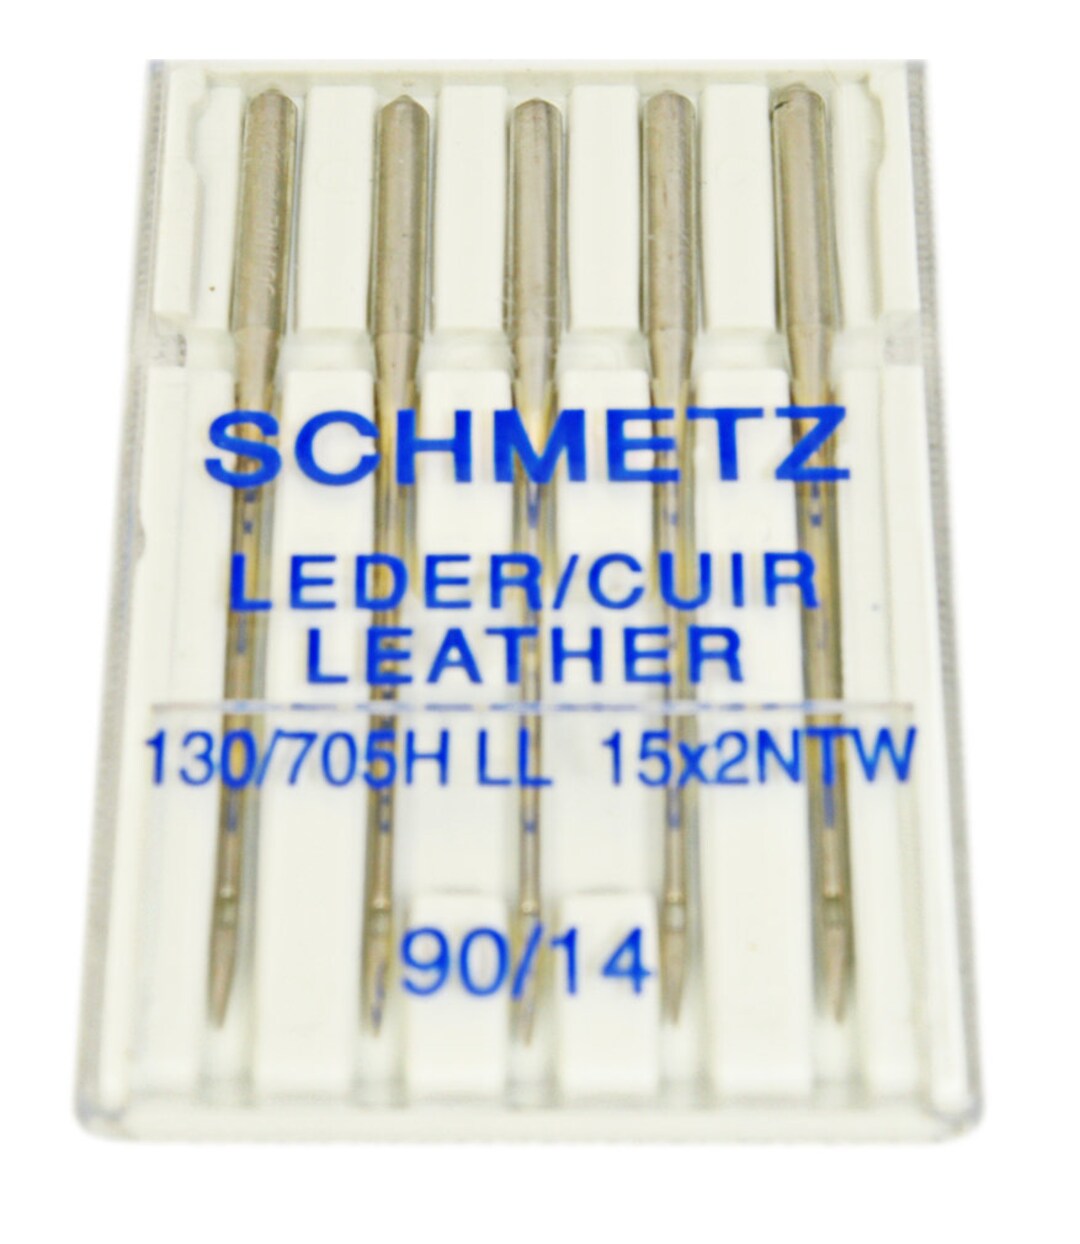 25 Schmetz Leather Sewing Machine Needles 130/705H LL 15x2ntw Size